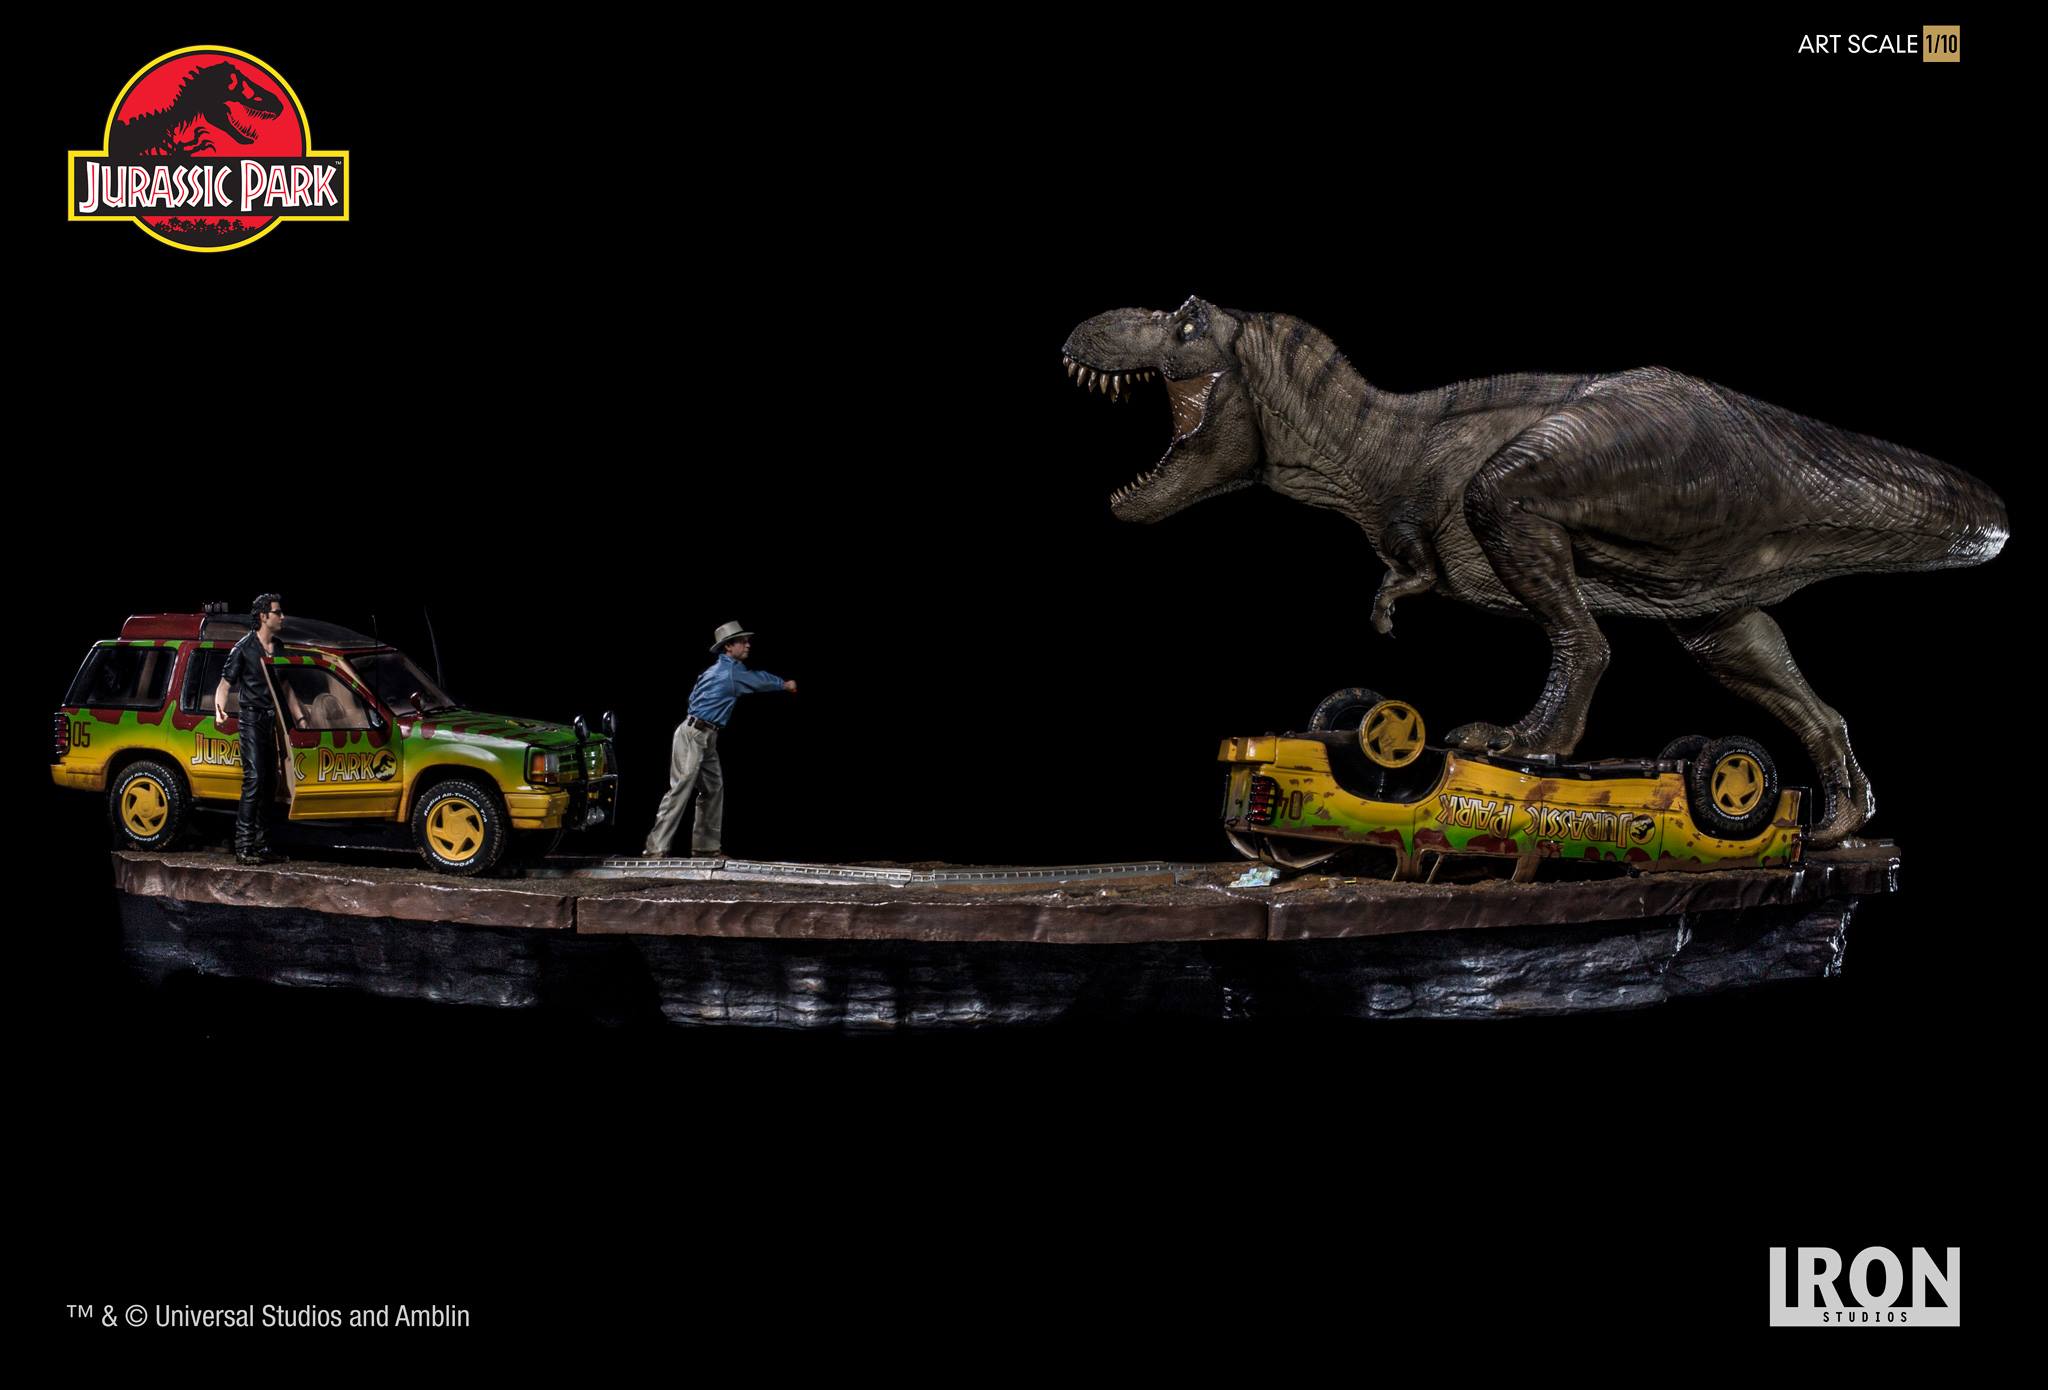 Jurassic Park & Jurassic World - Iron Studio - Page 2 2BkYOUru_o